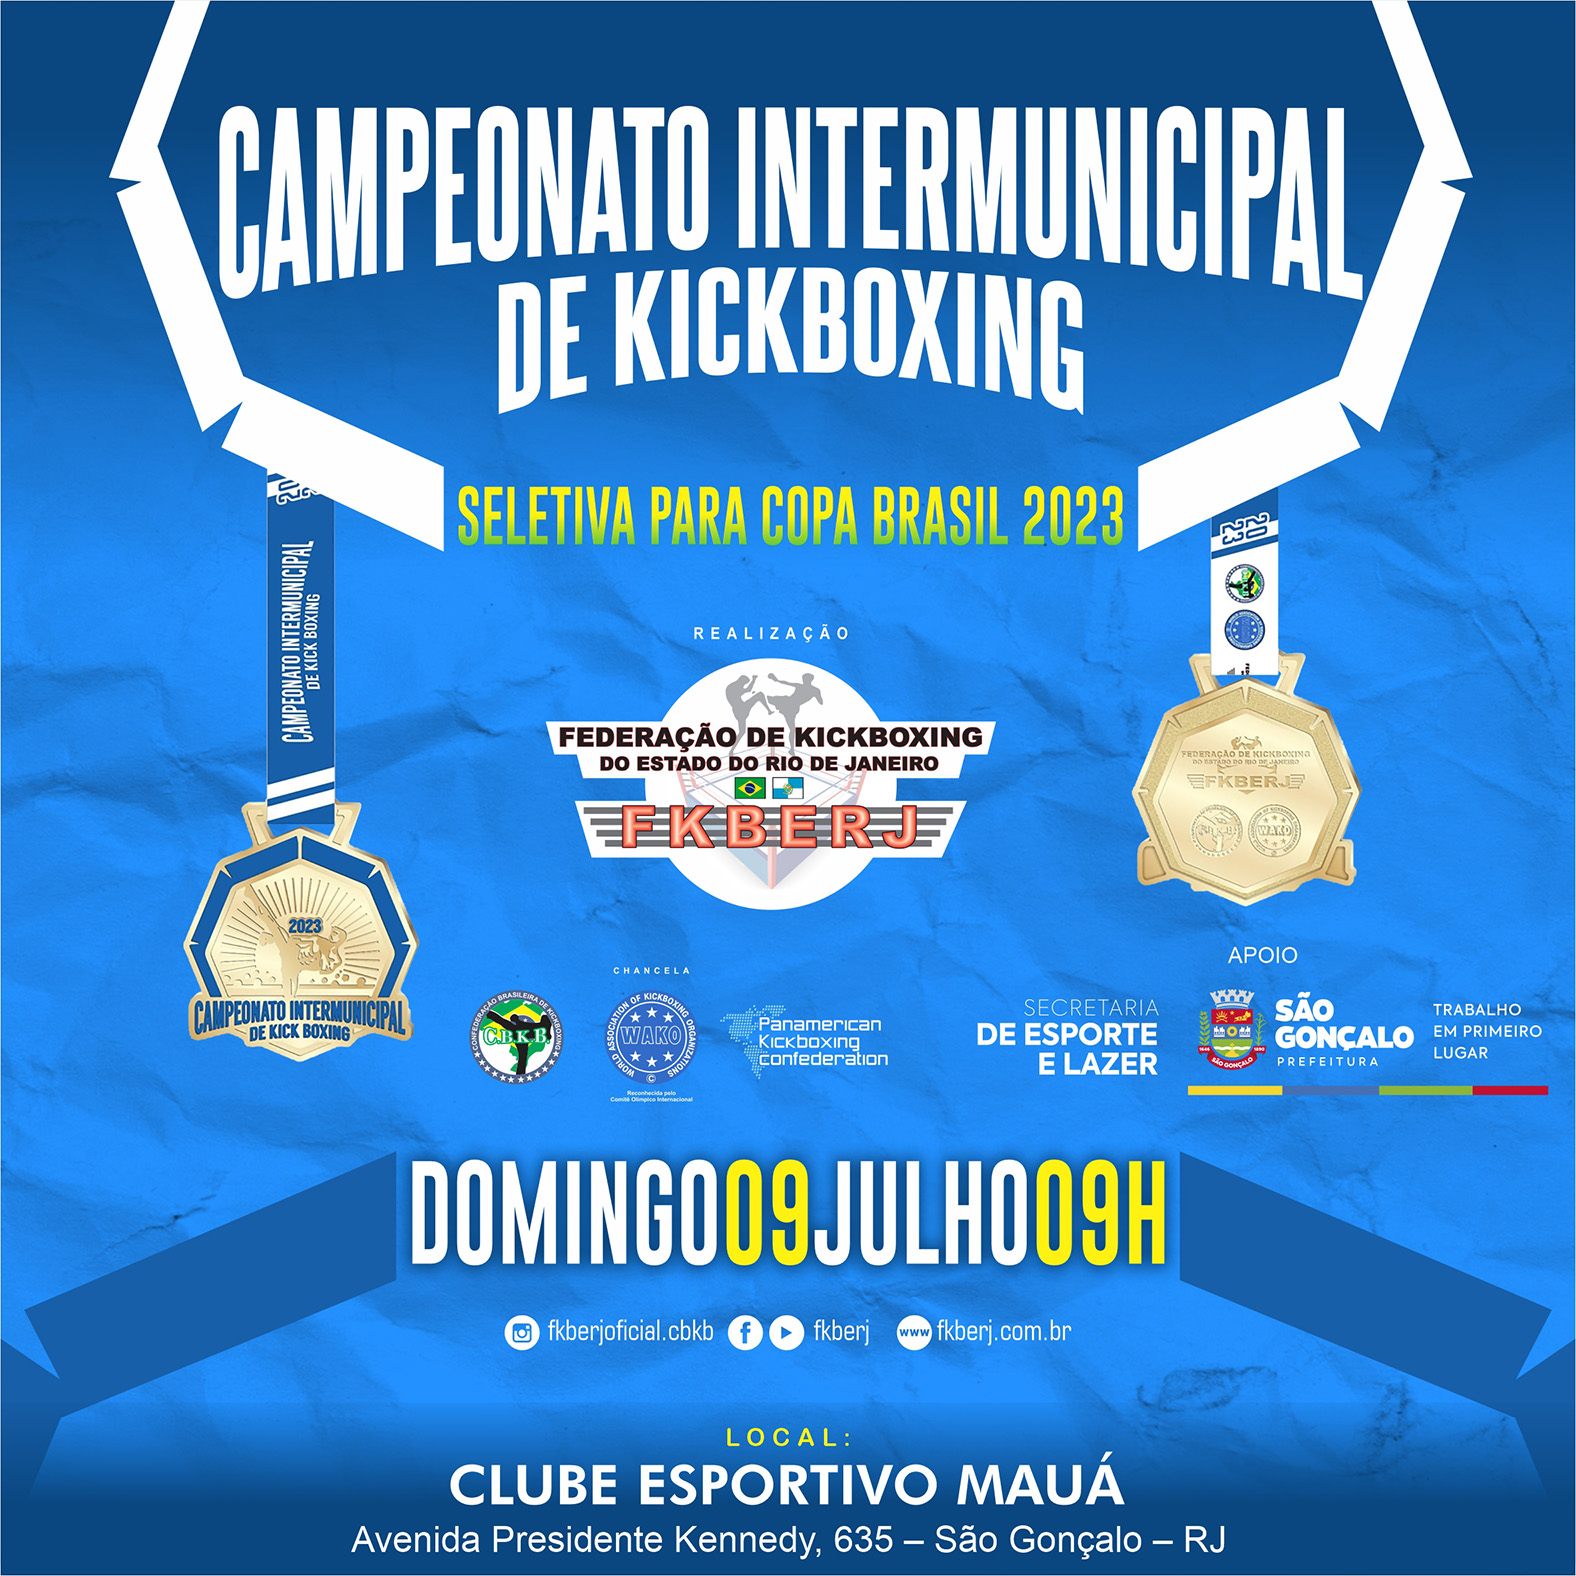 Campeonato Intermunicipal de Kickboxing - Seletiva para a Copa Brasil 2023